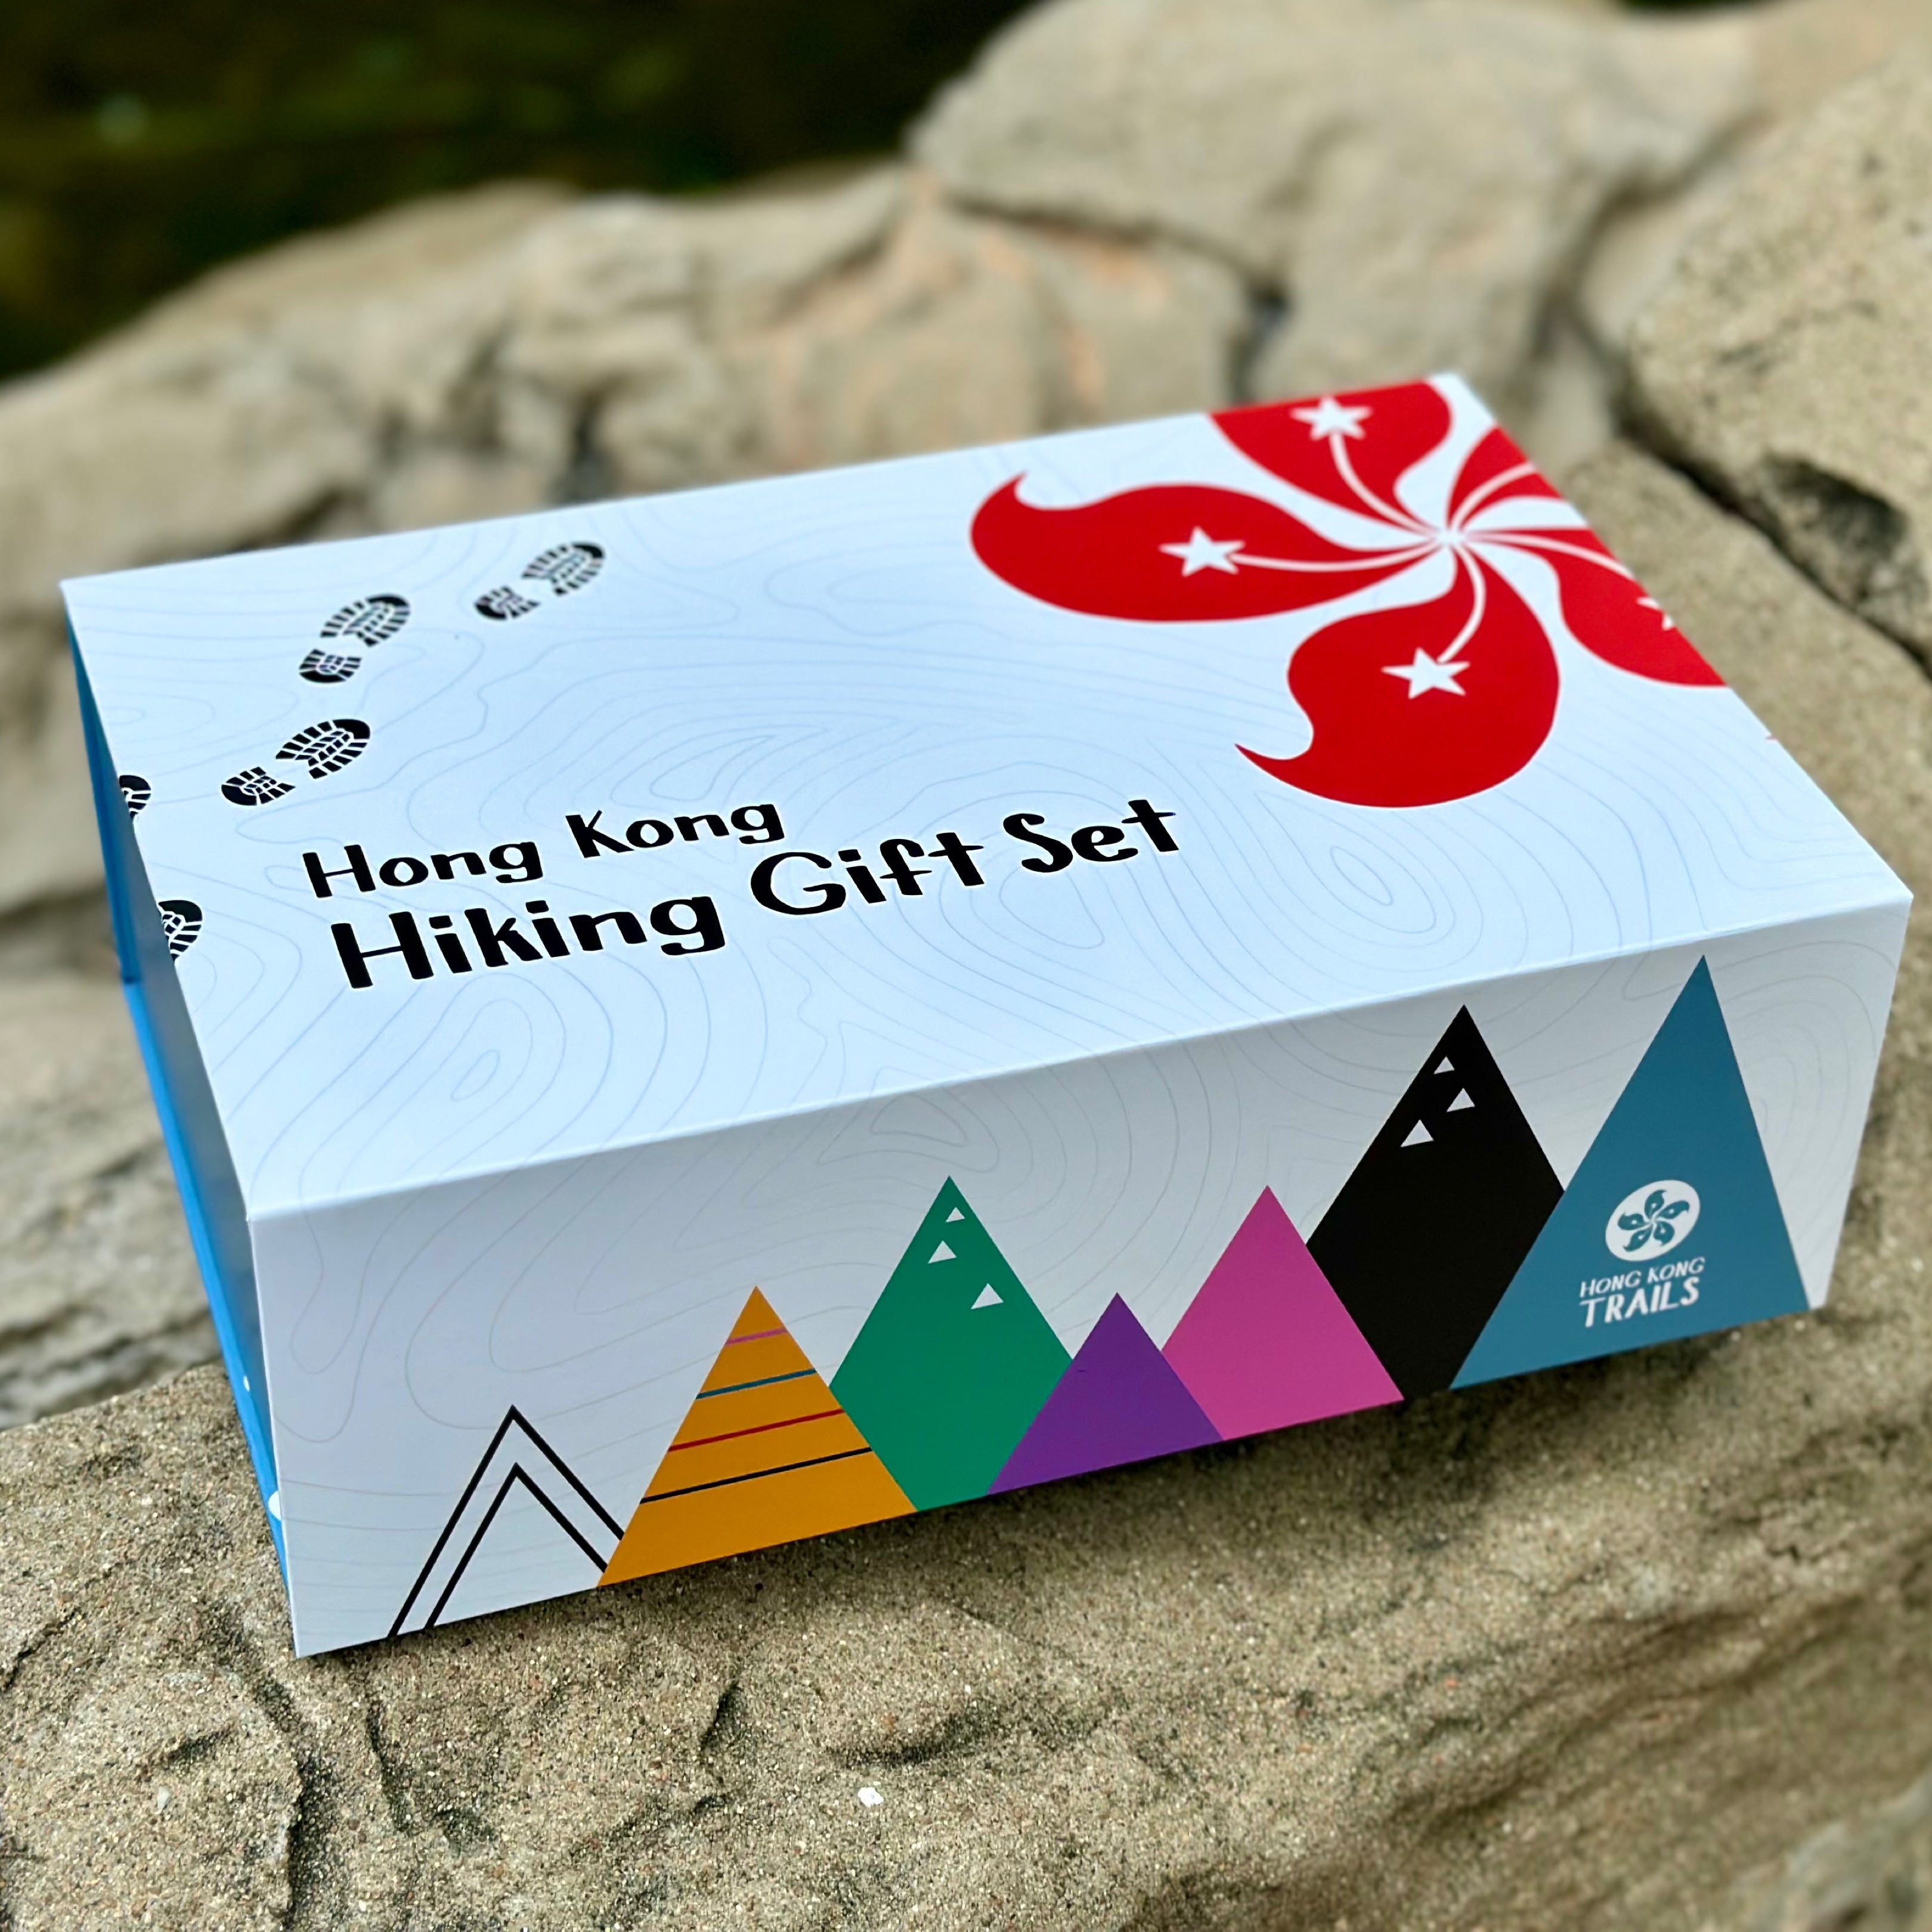 hong-kong-hiking-gift-set